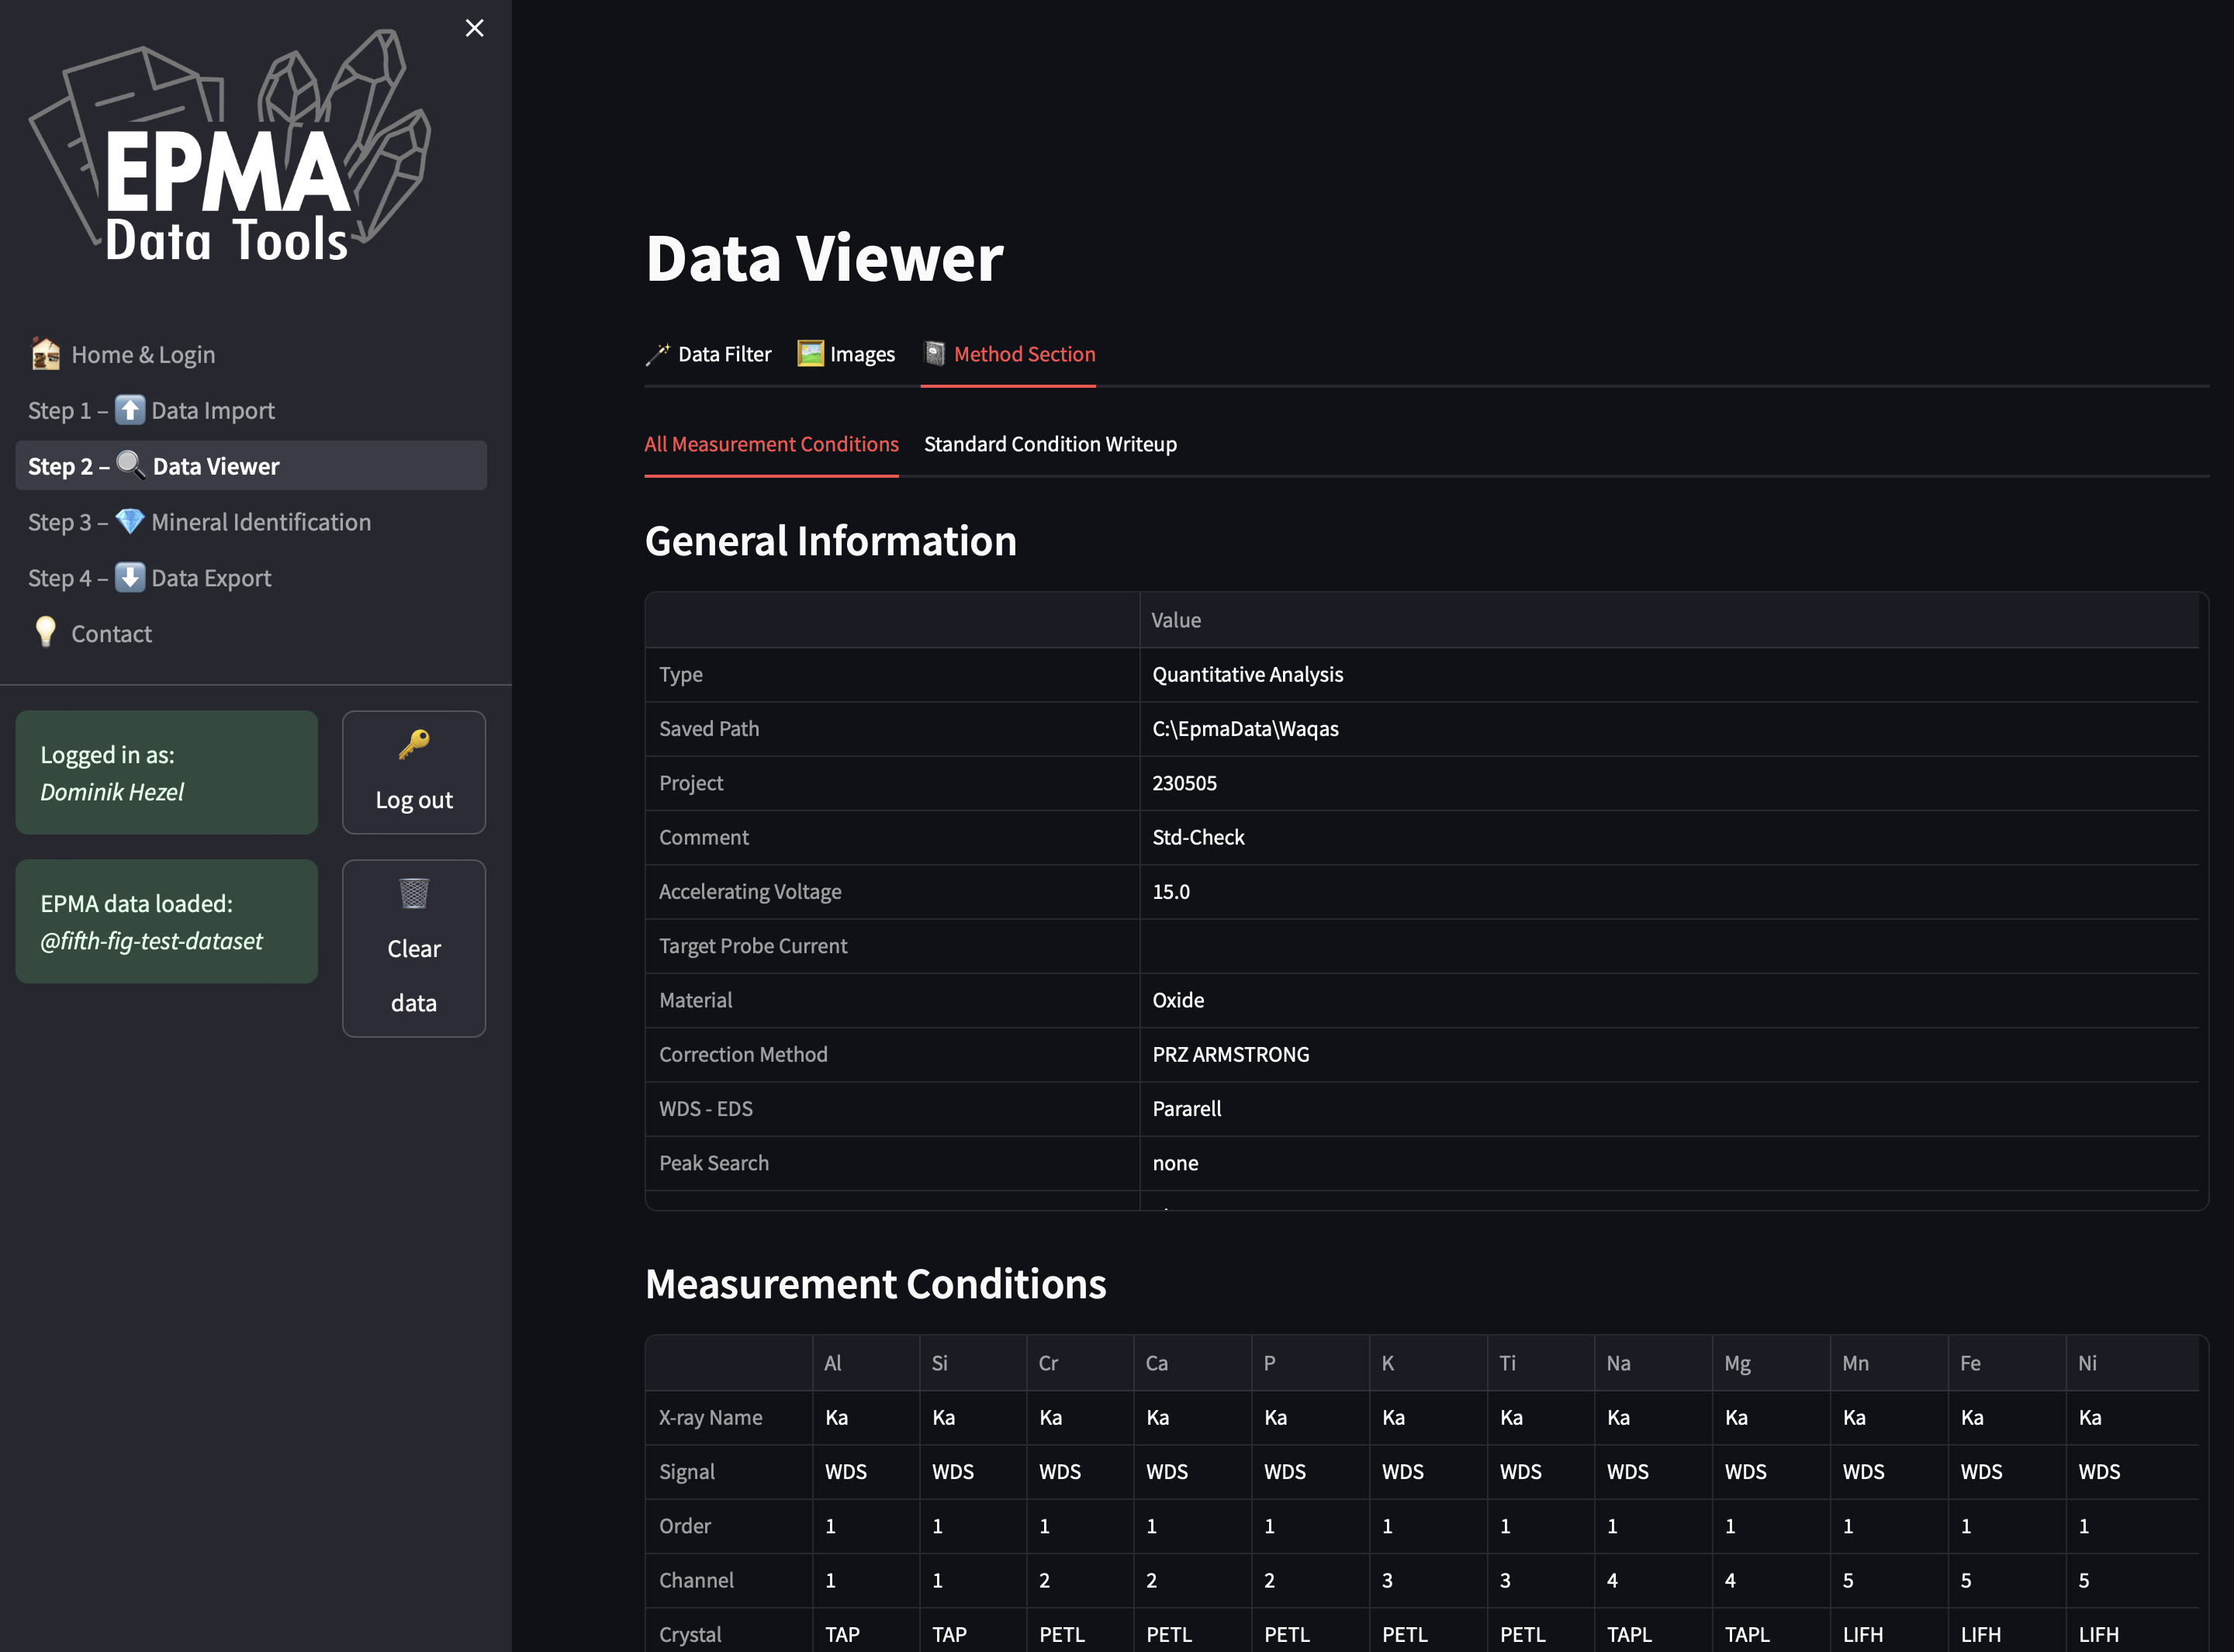 Landing page of the EPMA Data Tools web app.